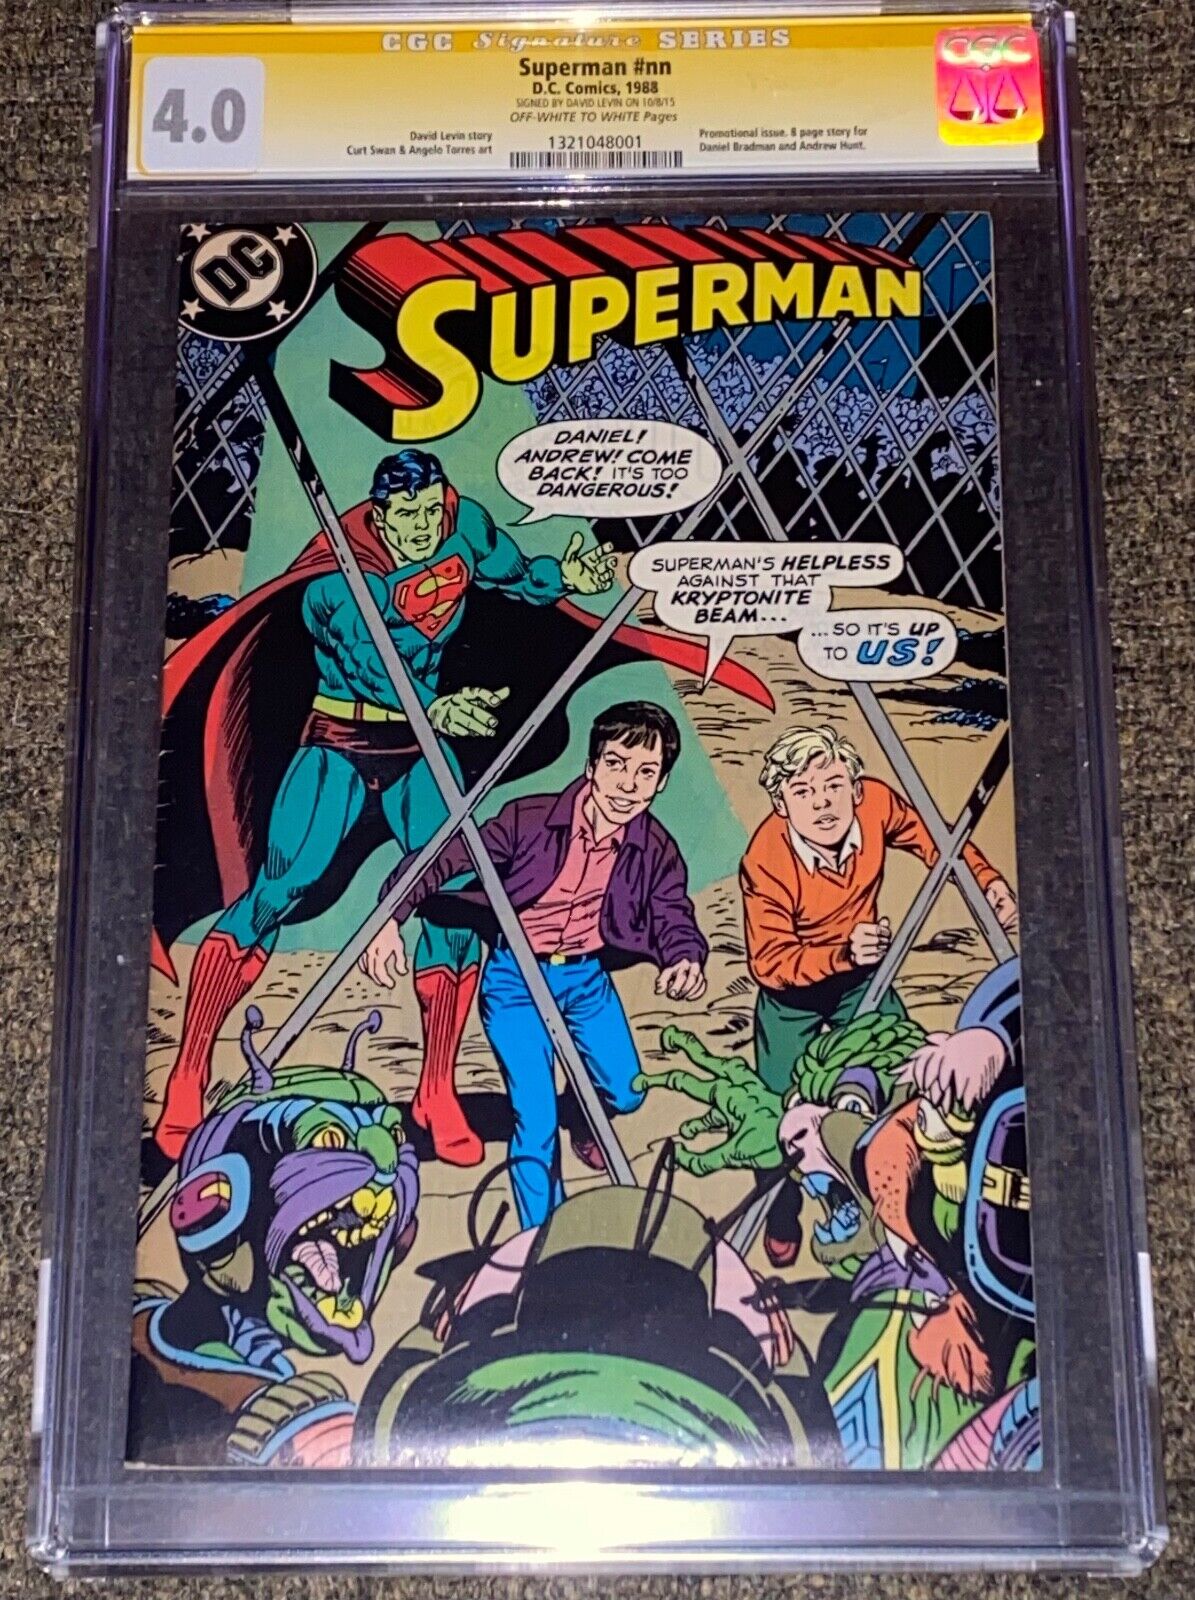 Superman THIS ISLAND BRADMAN-ONLY SIGNED COPY-Rare Bar Mitzvah Issue CGC 4.0